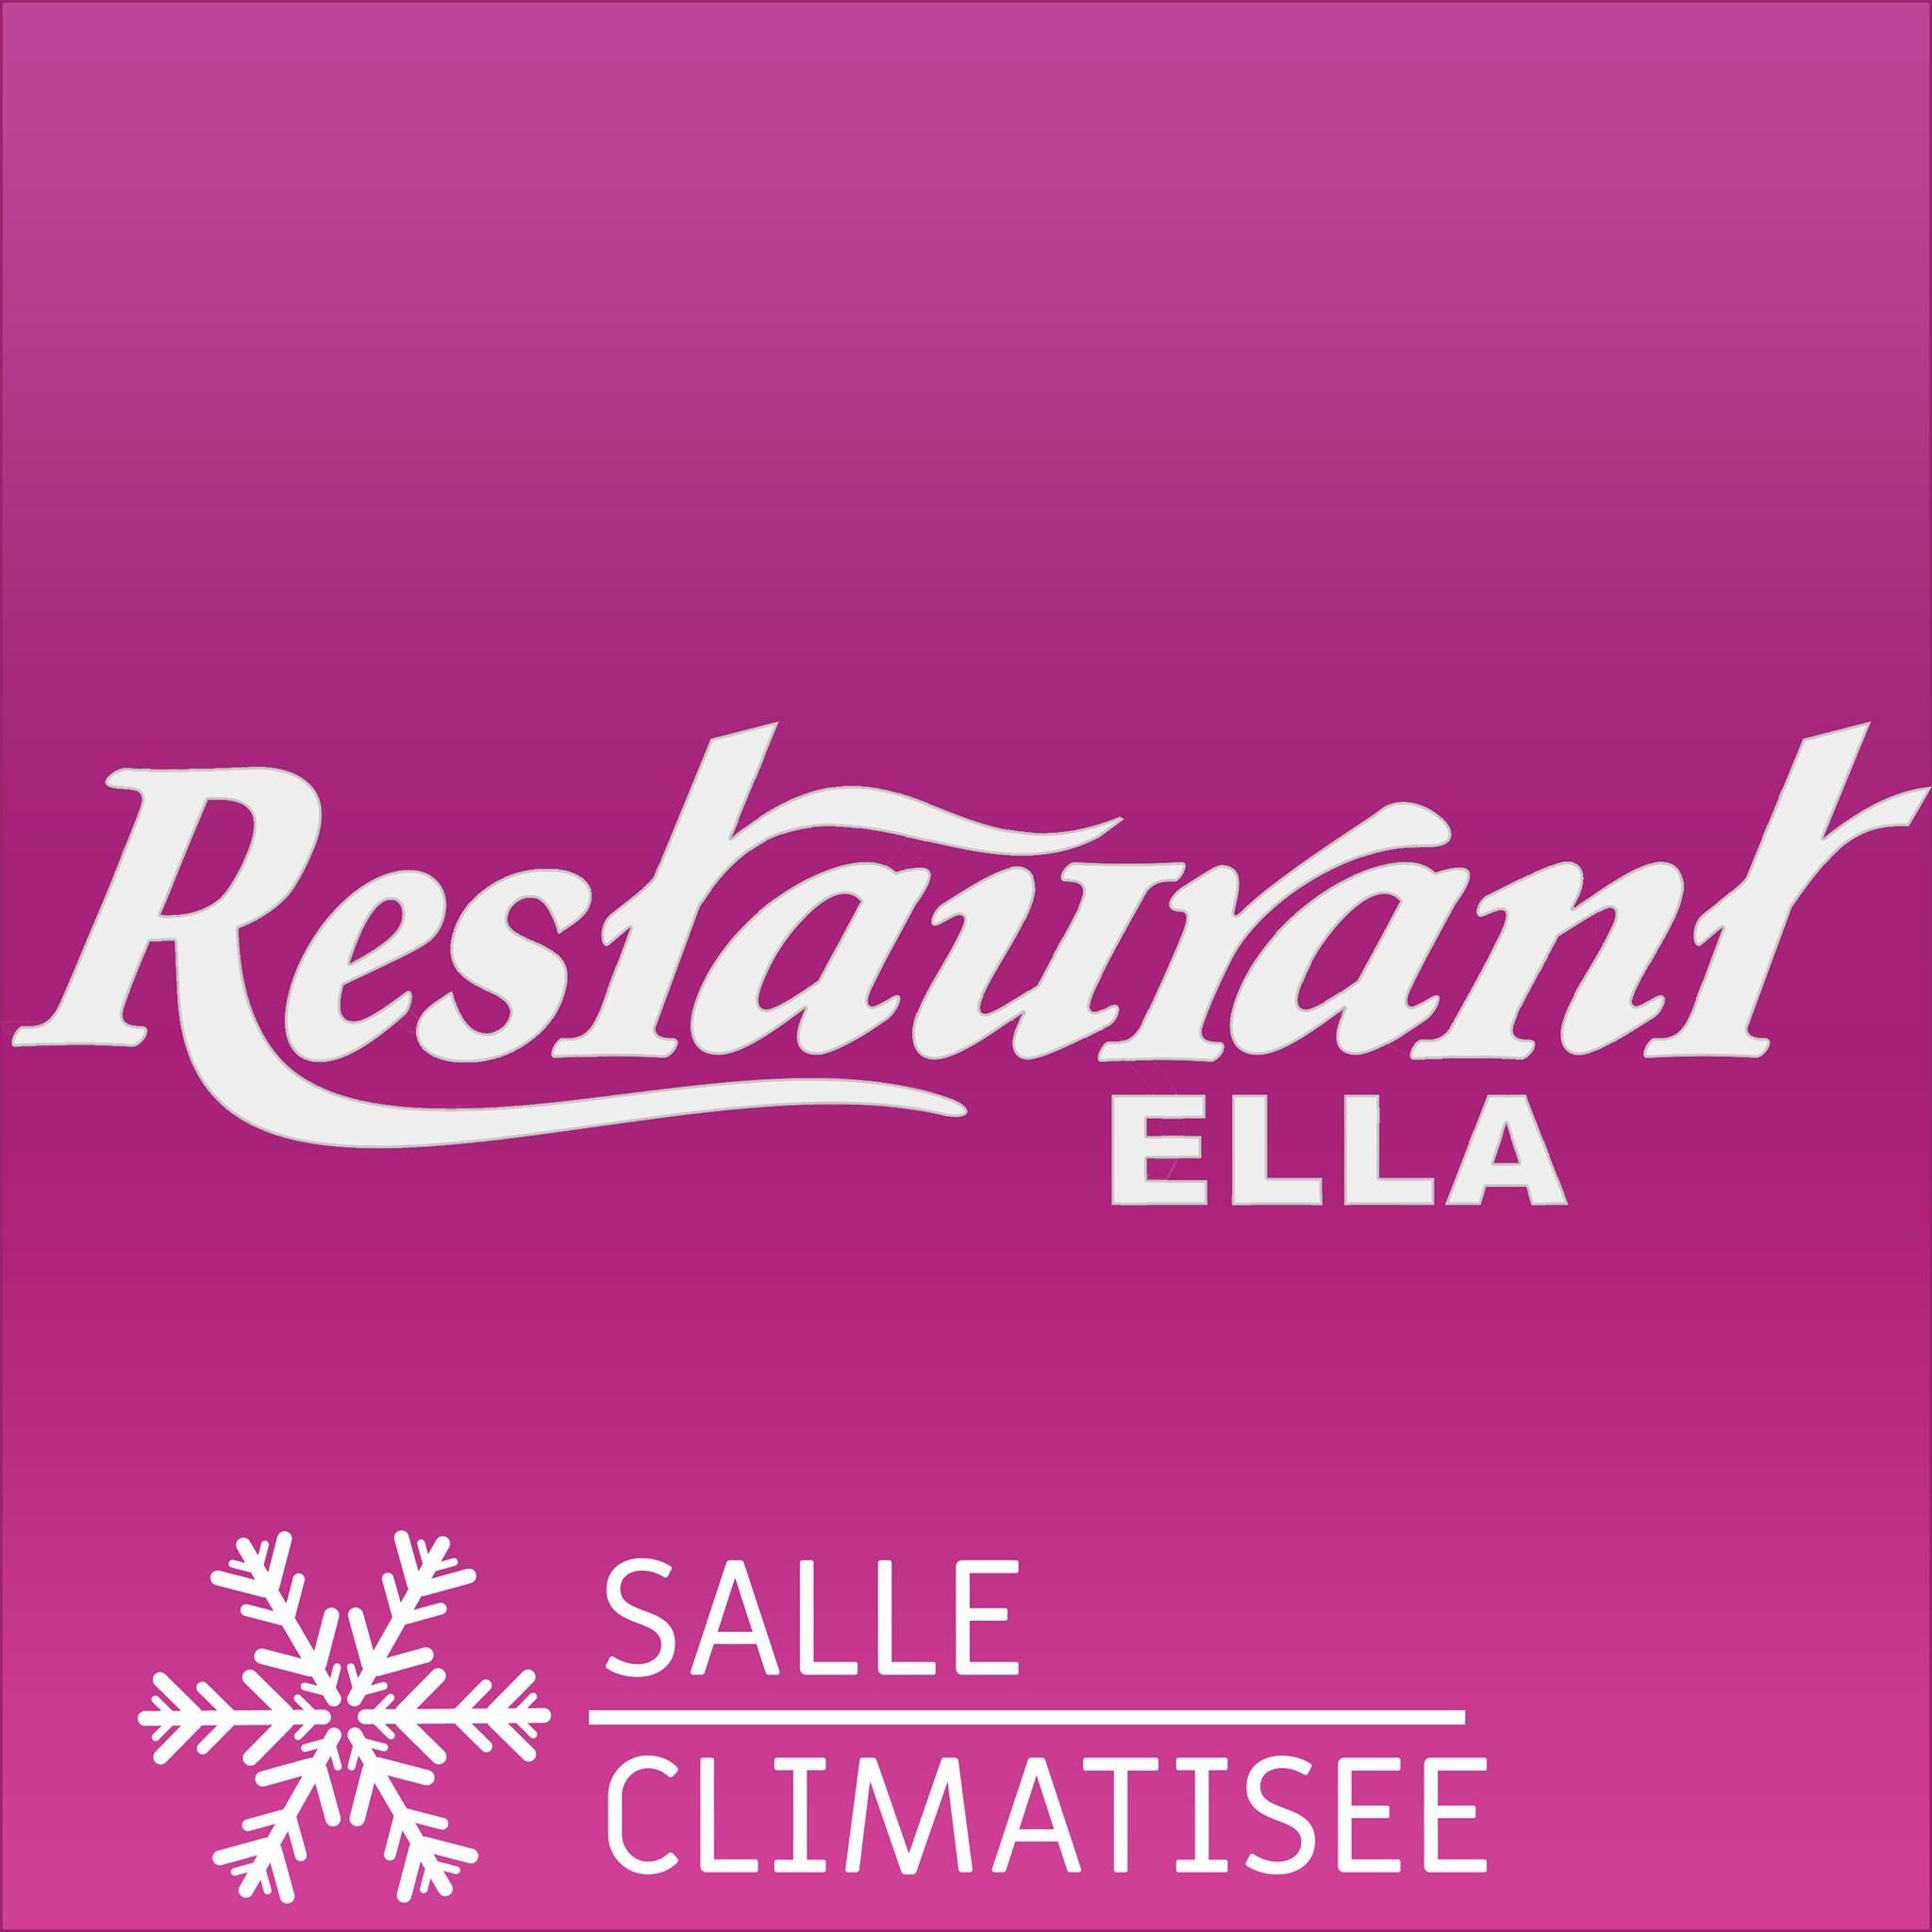 Restaurant Ella